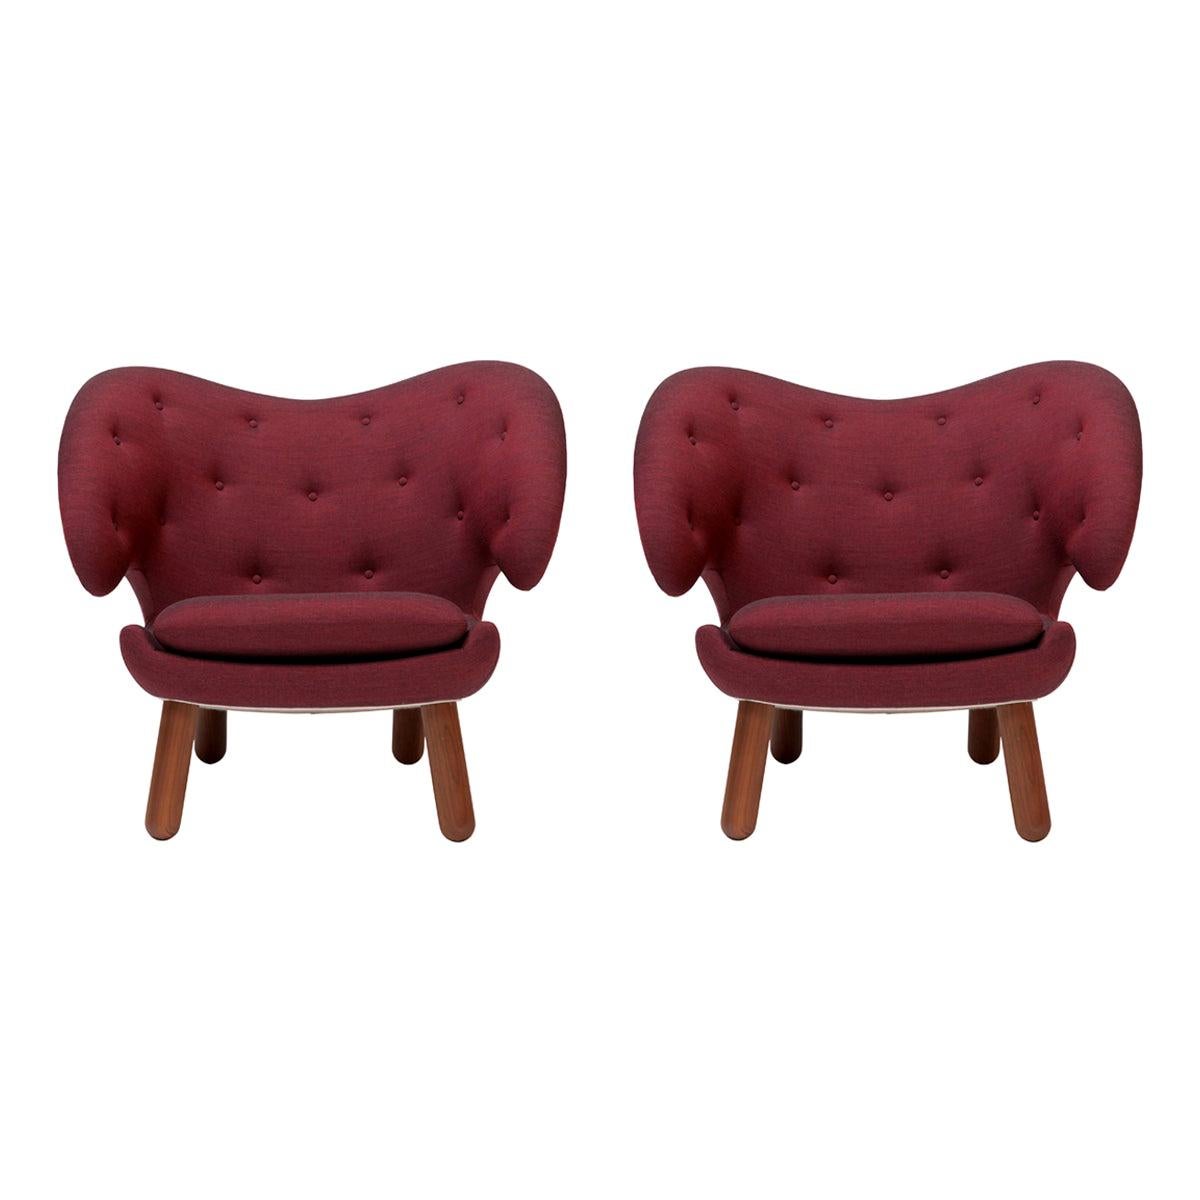 Set of Two Pelican Chairs in Garnet Kvadrat Remix and Wood by Finn Juhl